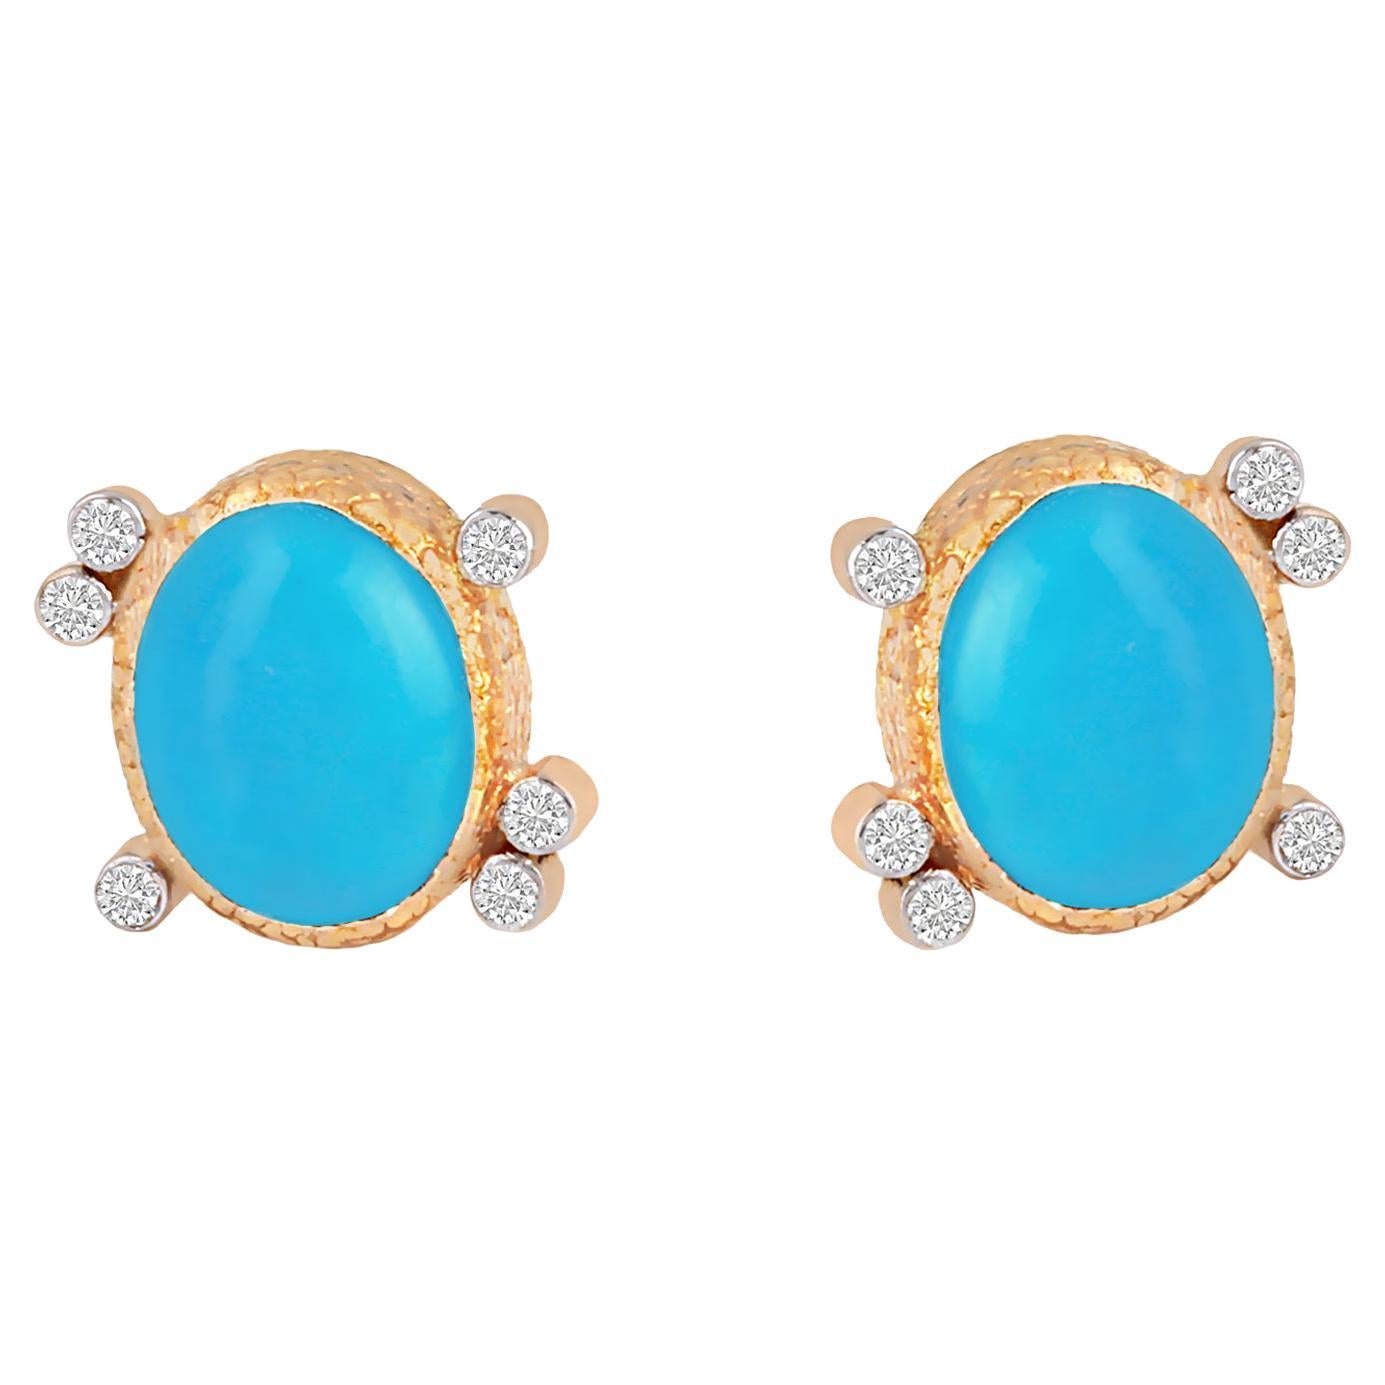 Beautiful Turquoise Diamond Gold Long Drop Earrings At Stdibs